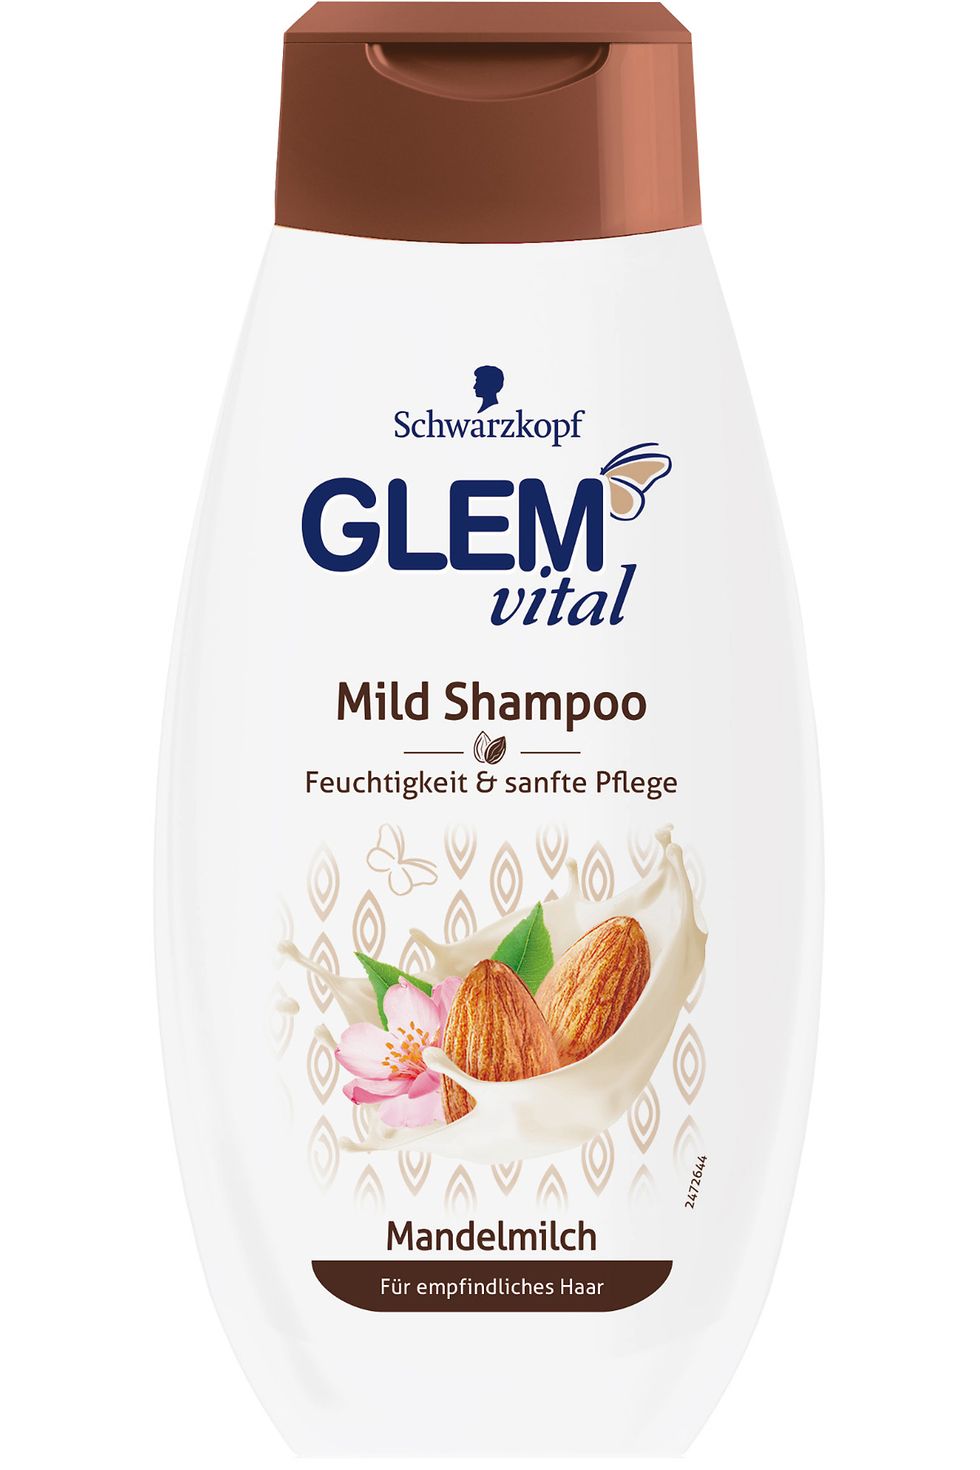 Glem vital Mandelmilch Shampoo